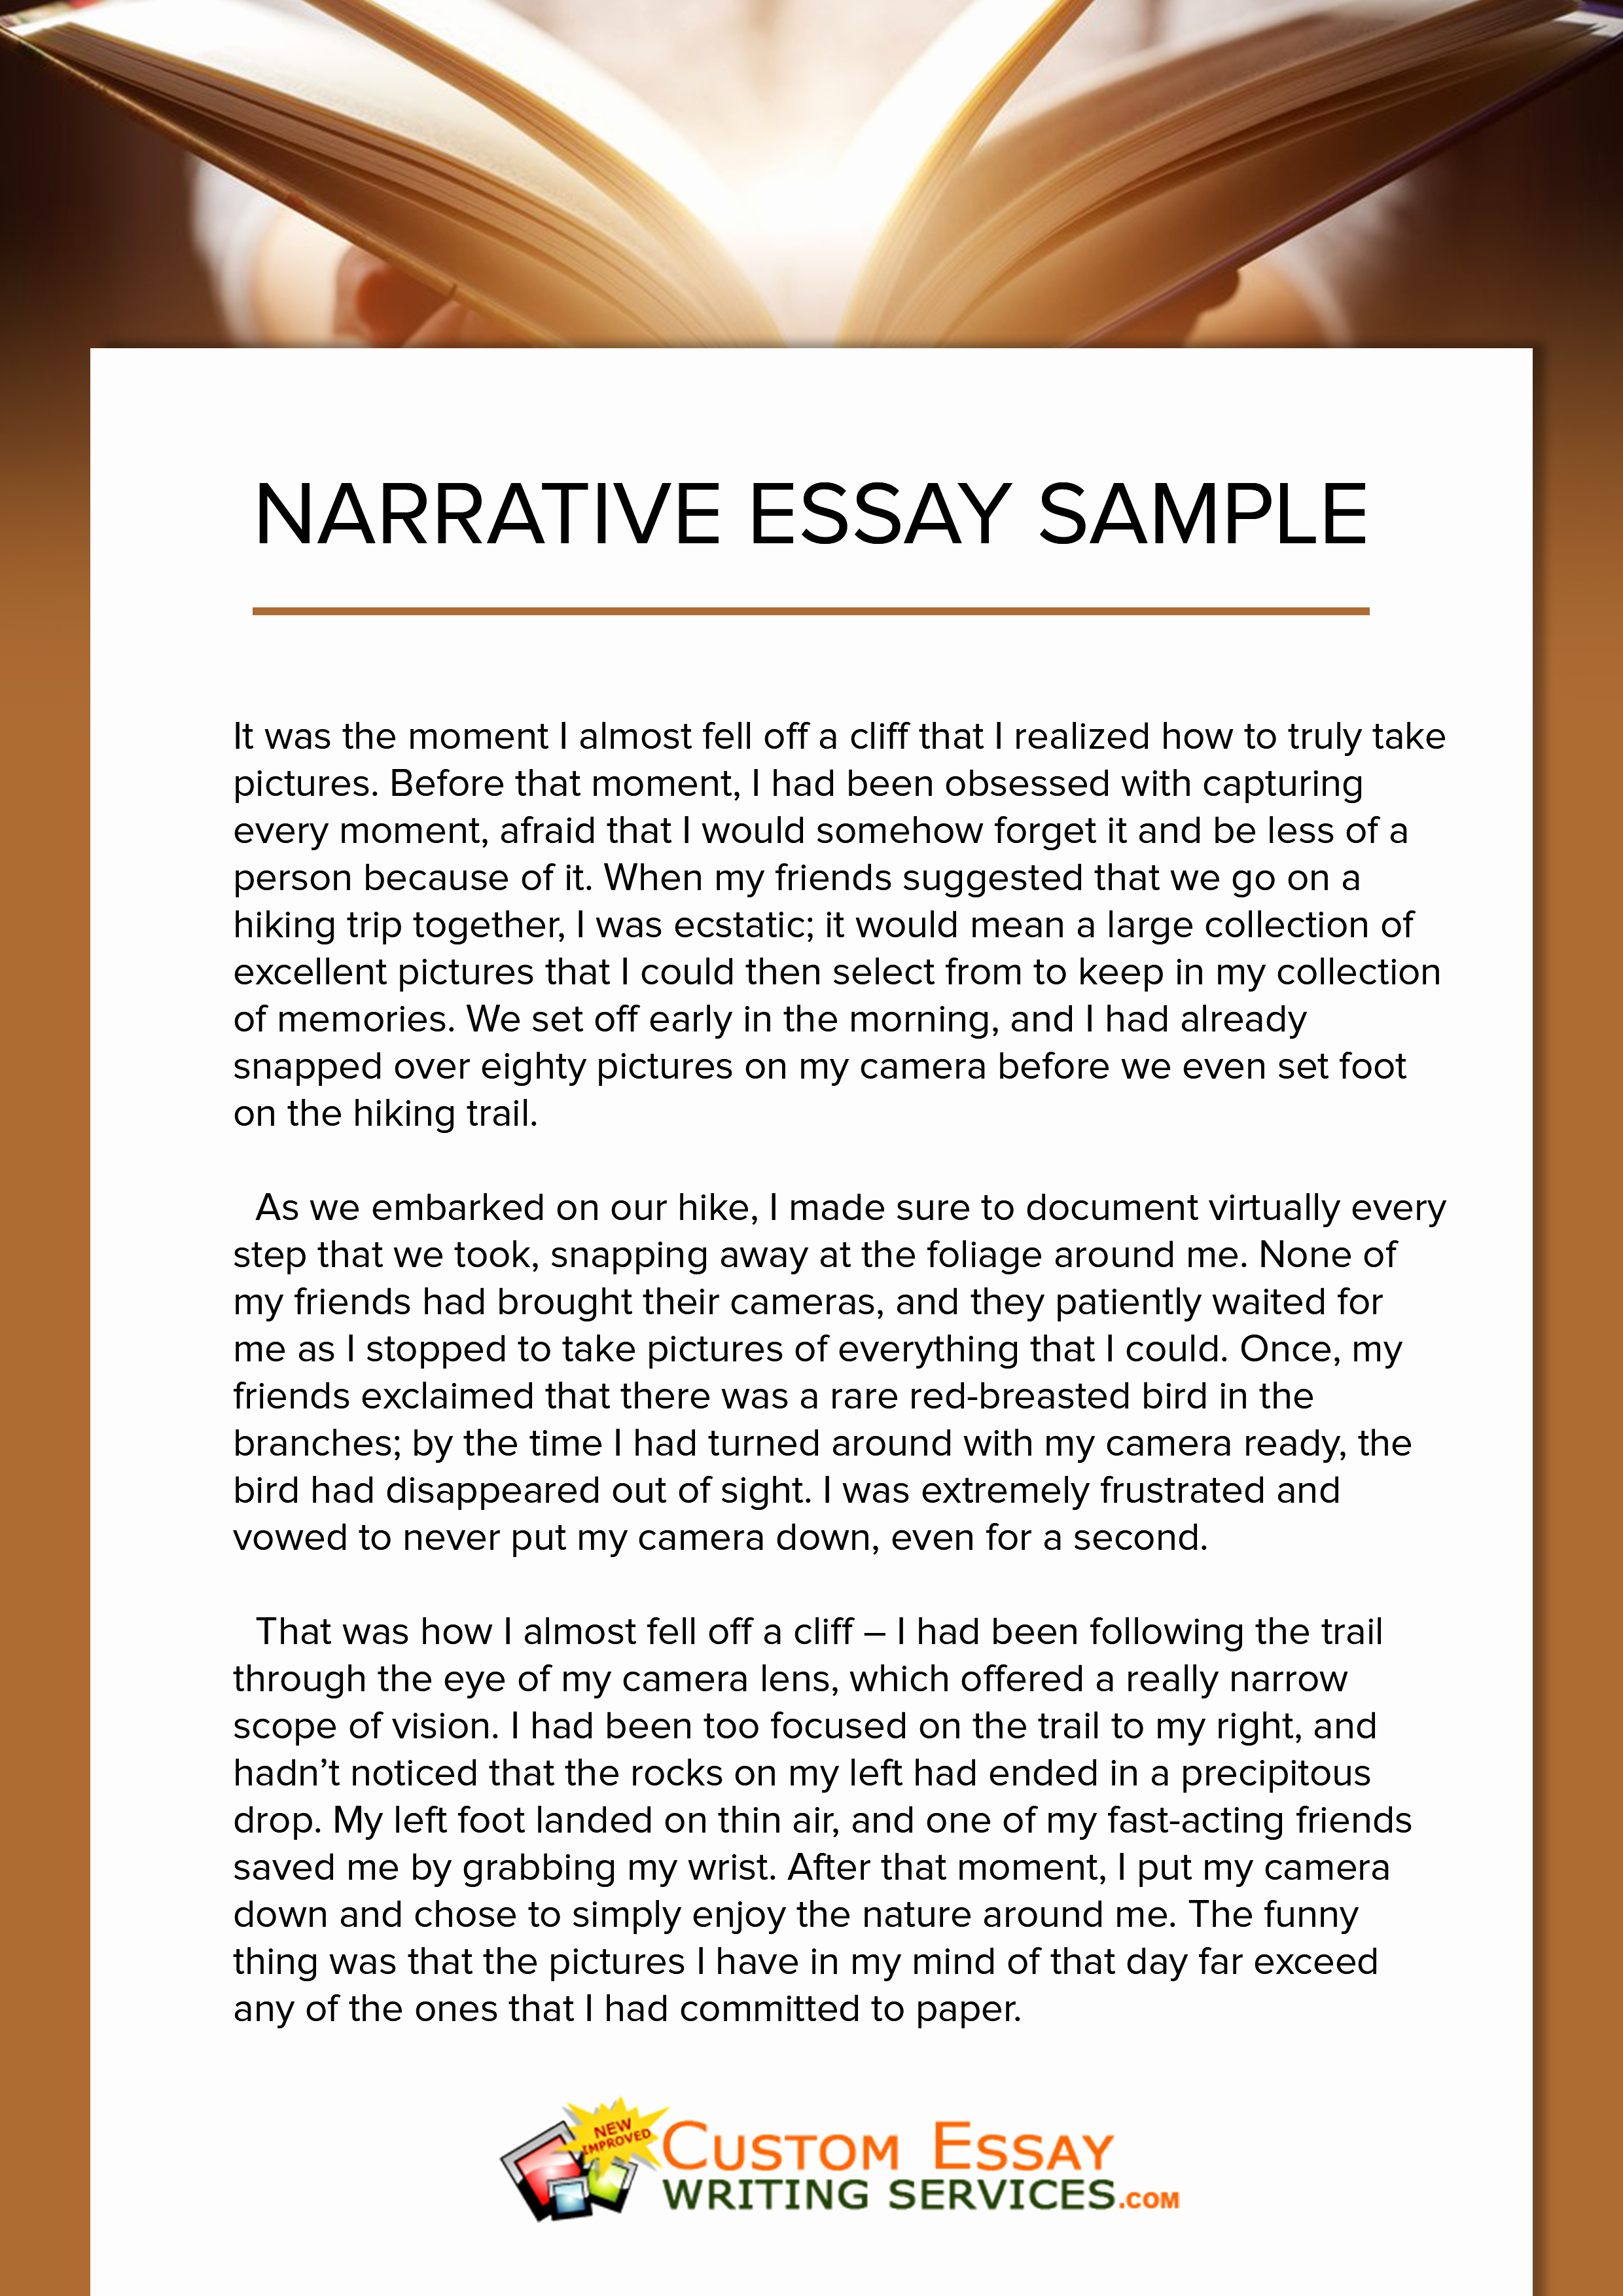 write a narrative essay in english